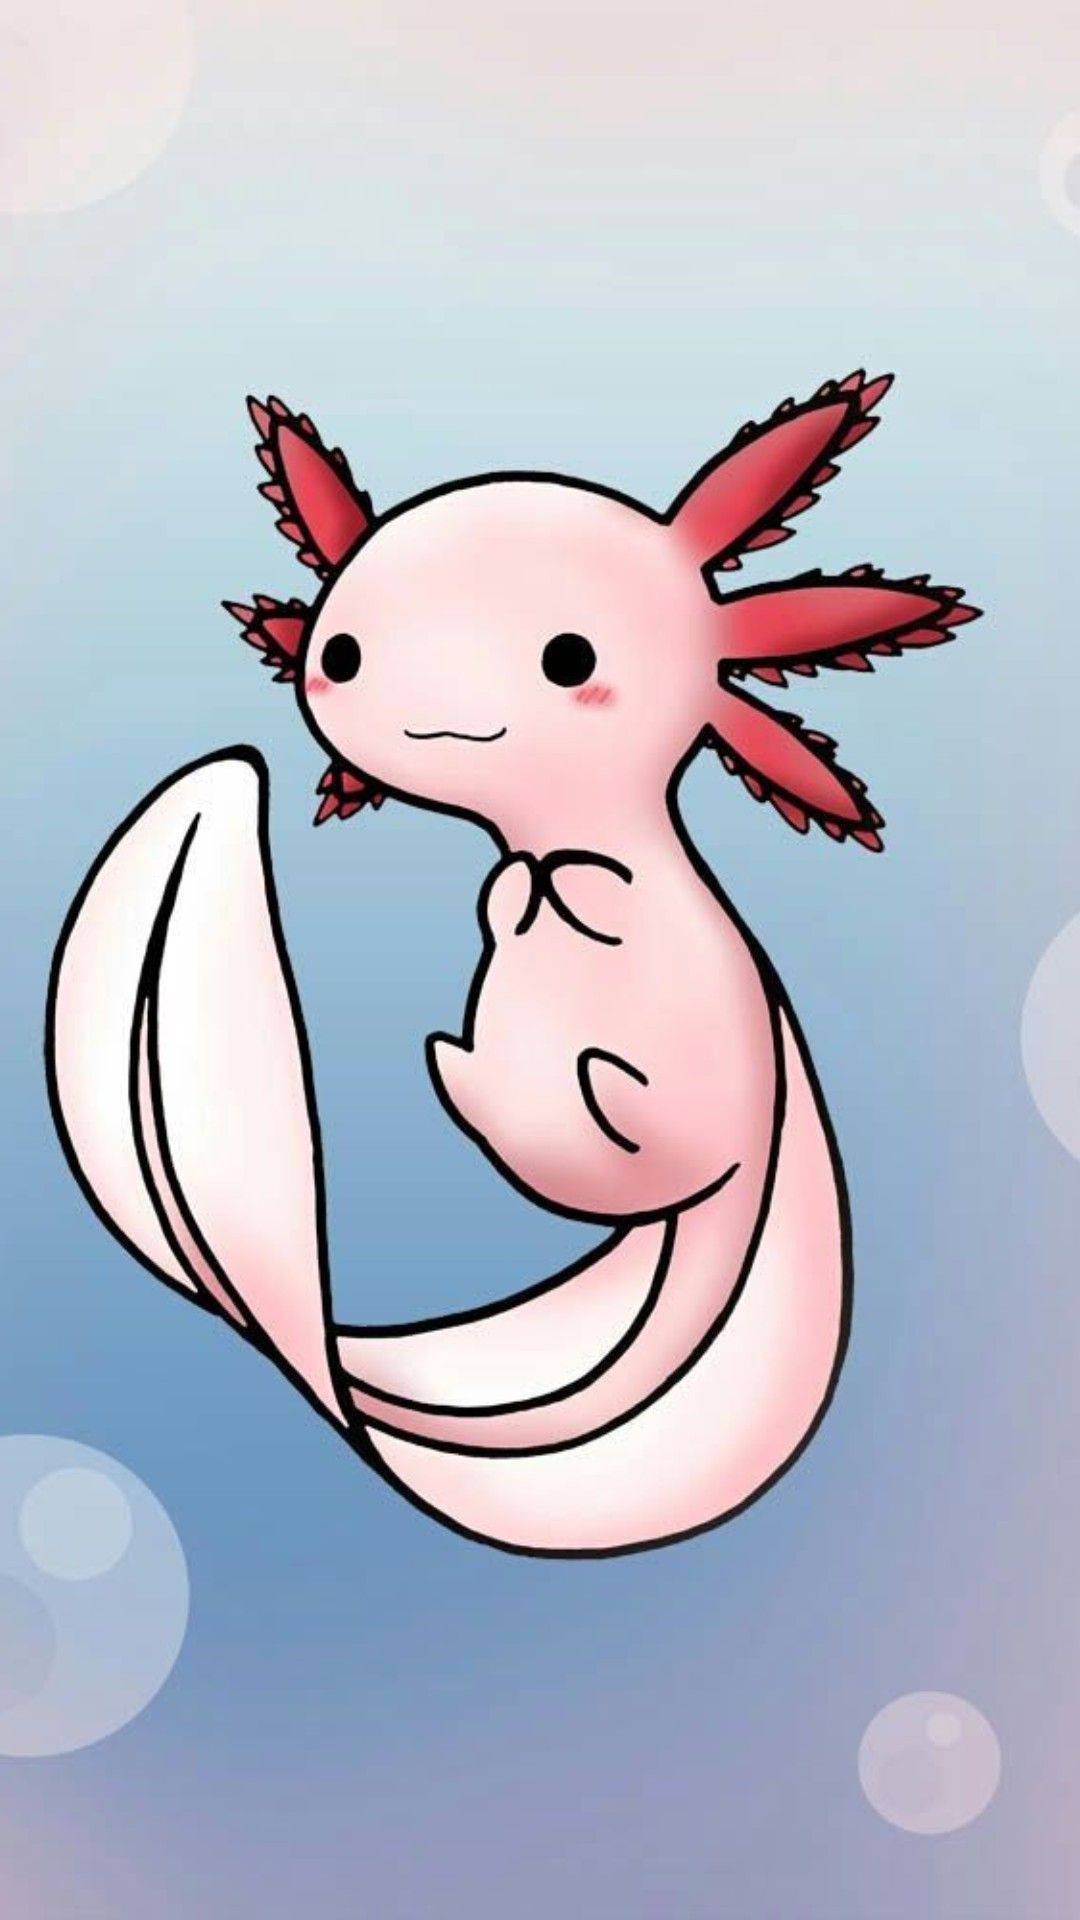 Axolotl Wallpaper: Best Axolotl iPhone Wallpaper [ HQ ]